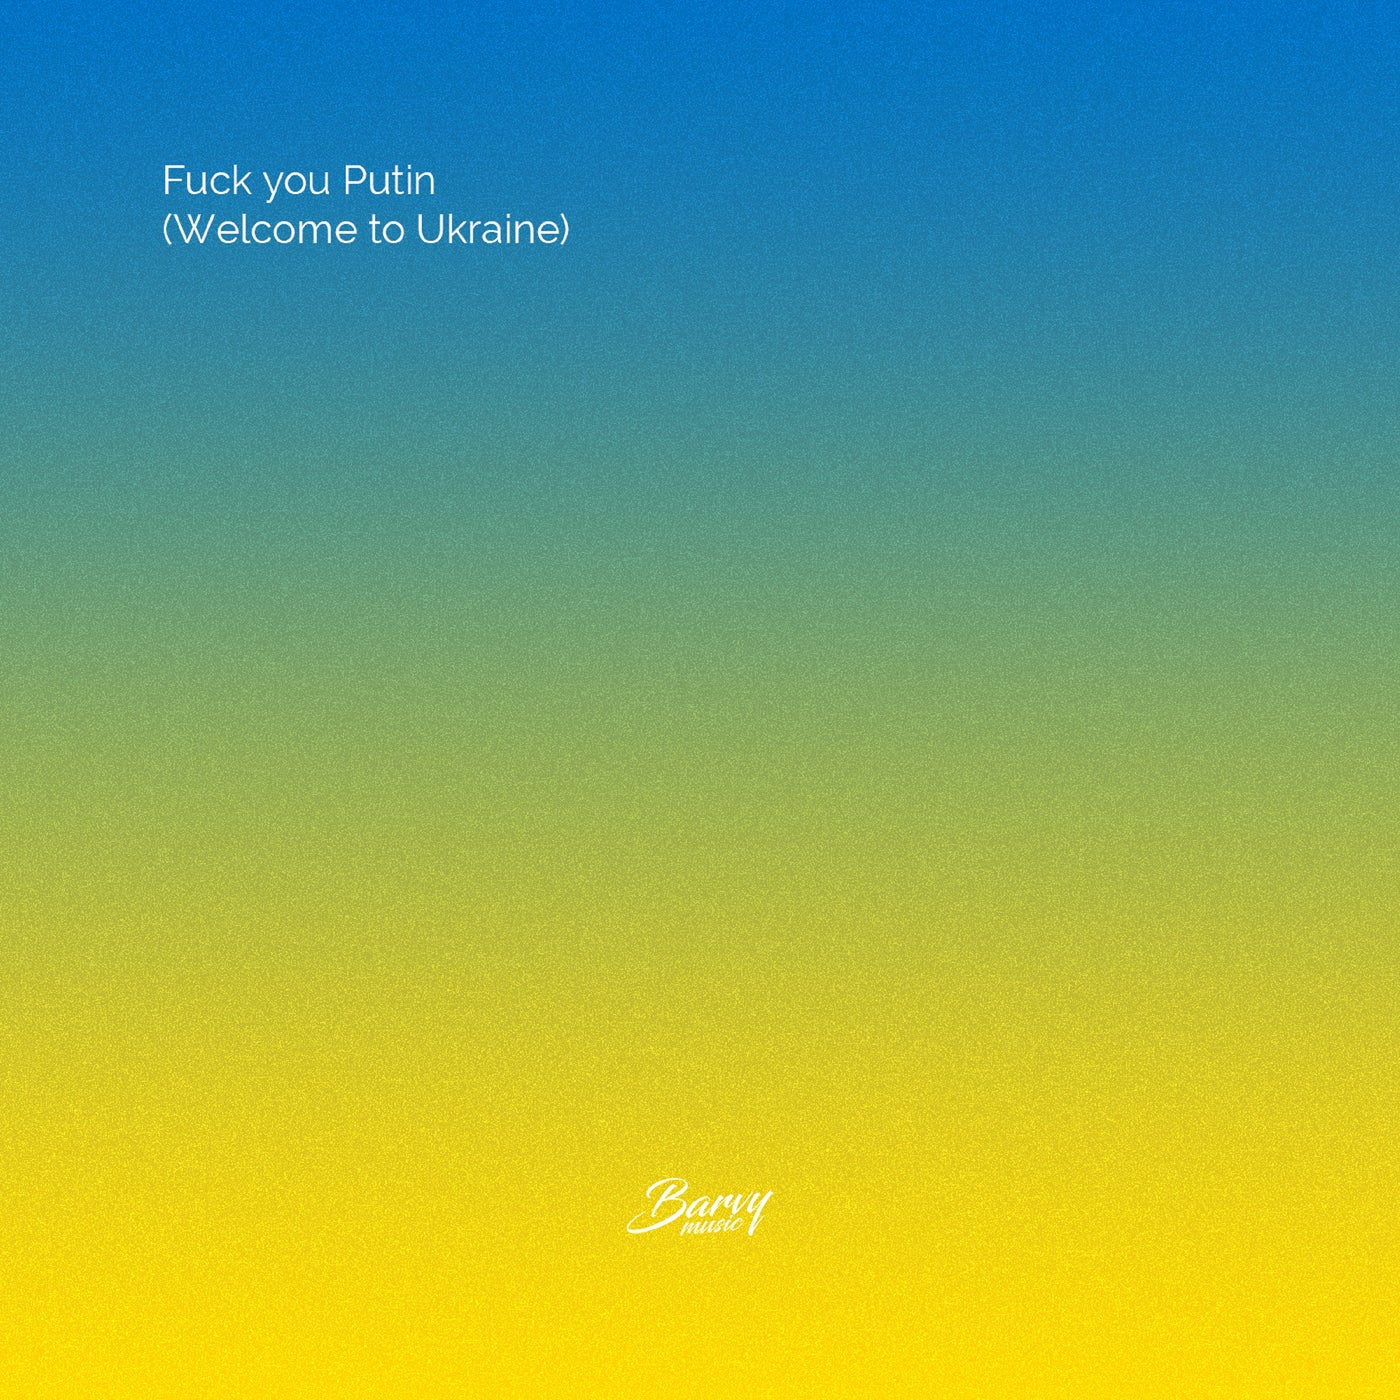 Fuck You Putin (Welcome to Ukraine)